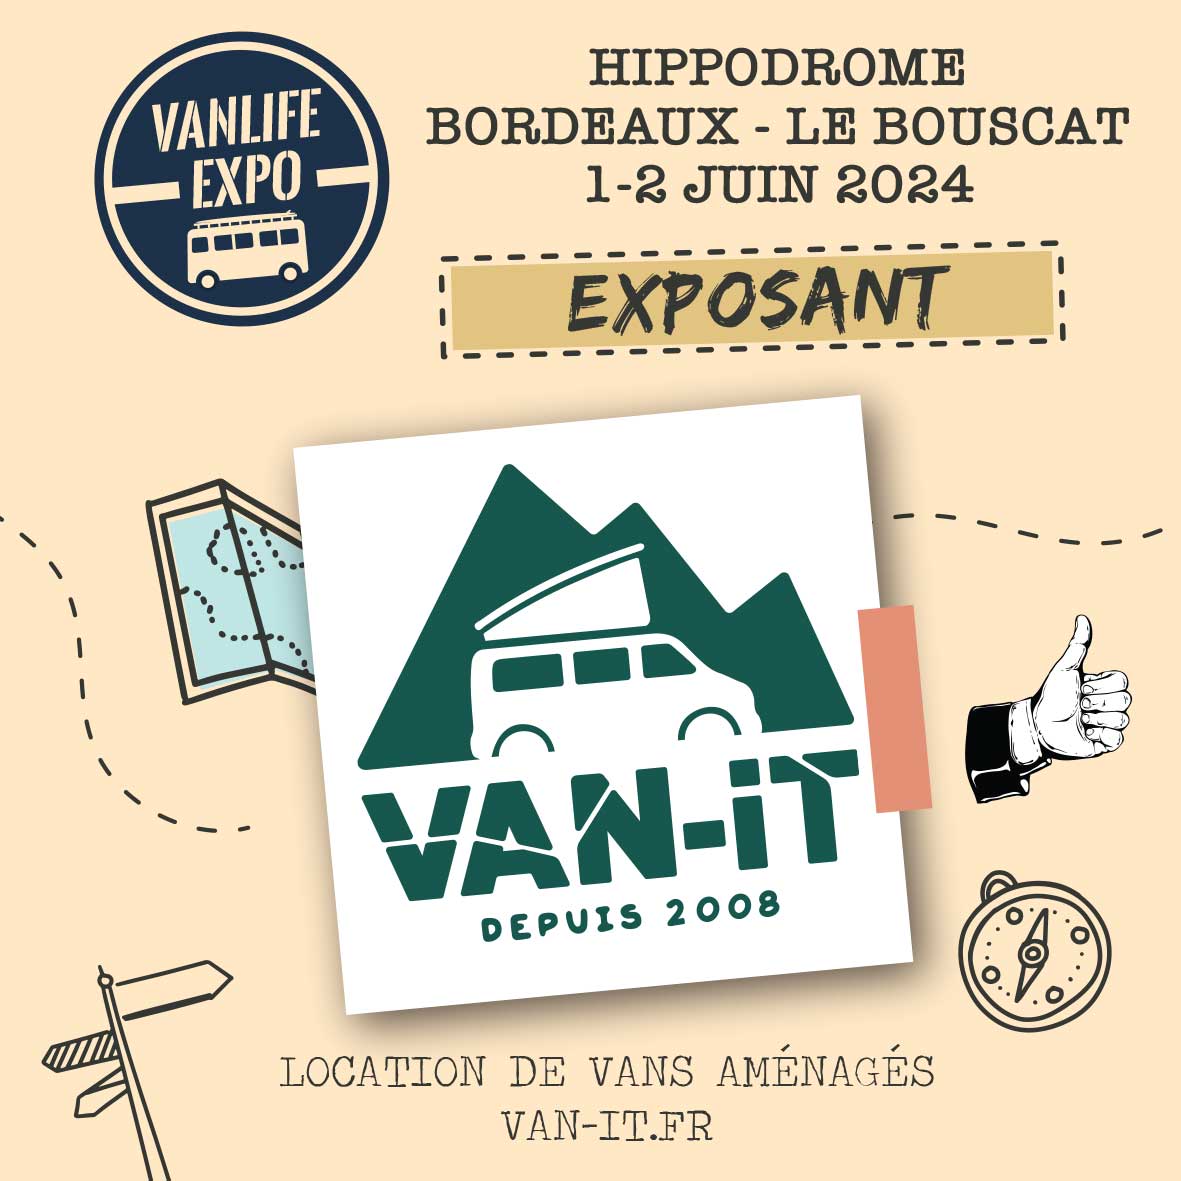 Featured image for “Van-It”